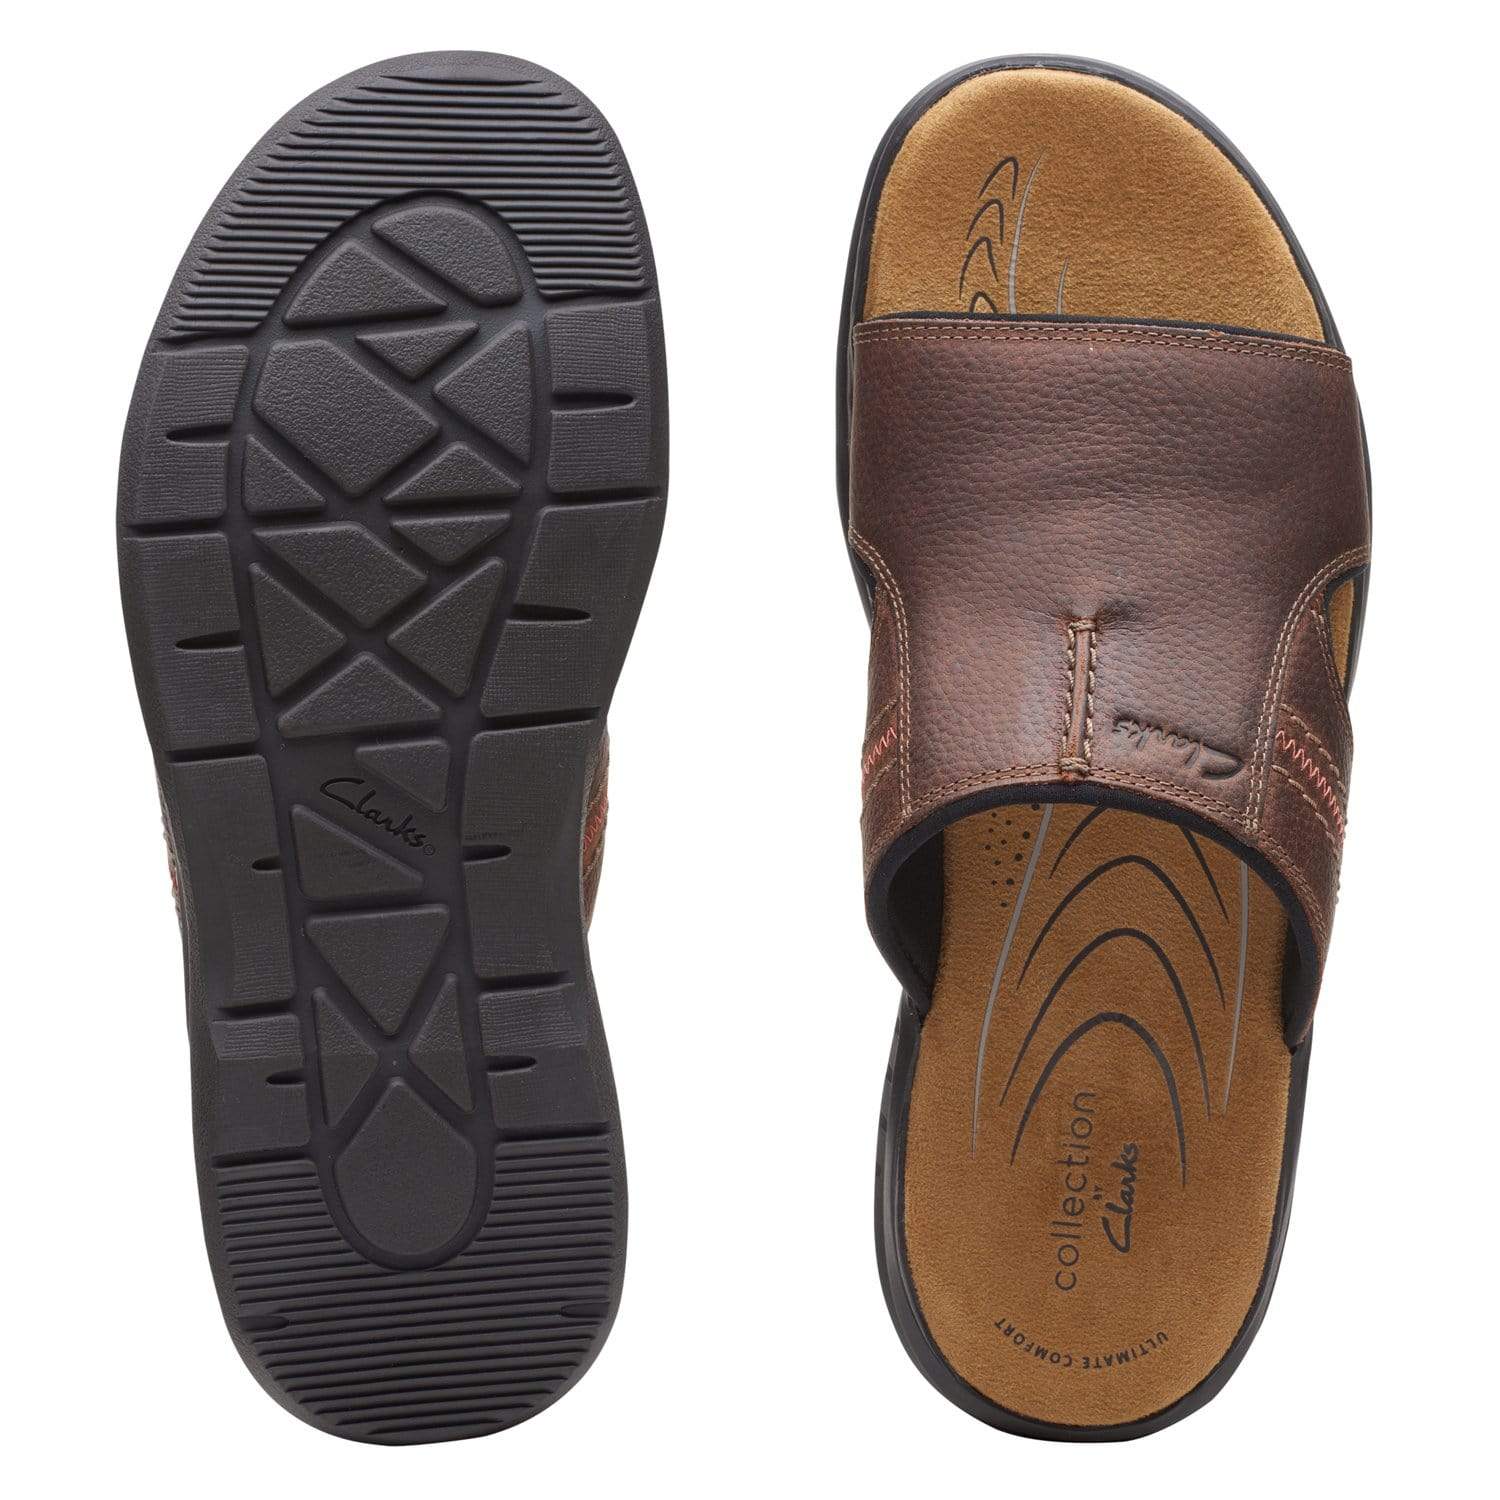 Clarks Hapsford Slide - Sandals - Brown Tumb - 261580867 - G Width (Standard Fit)